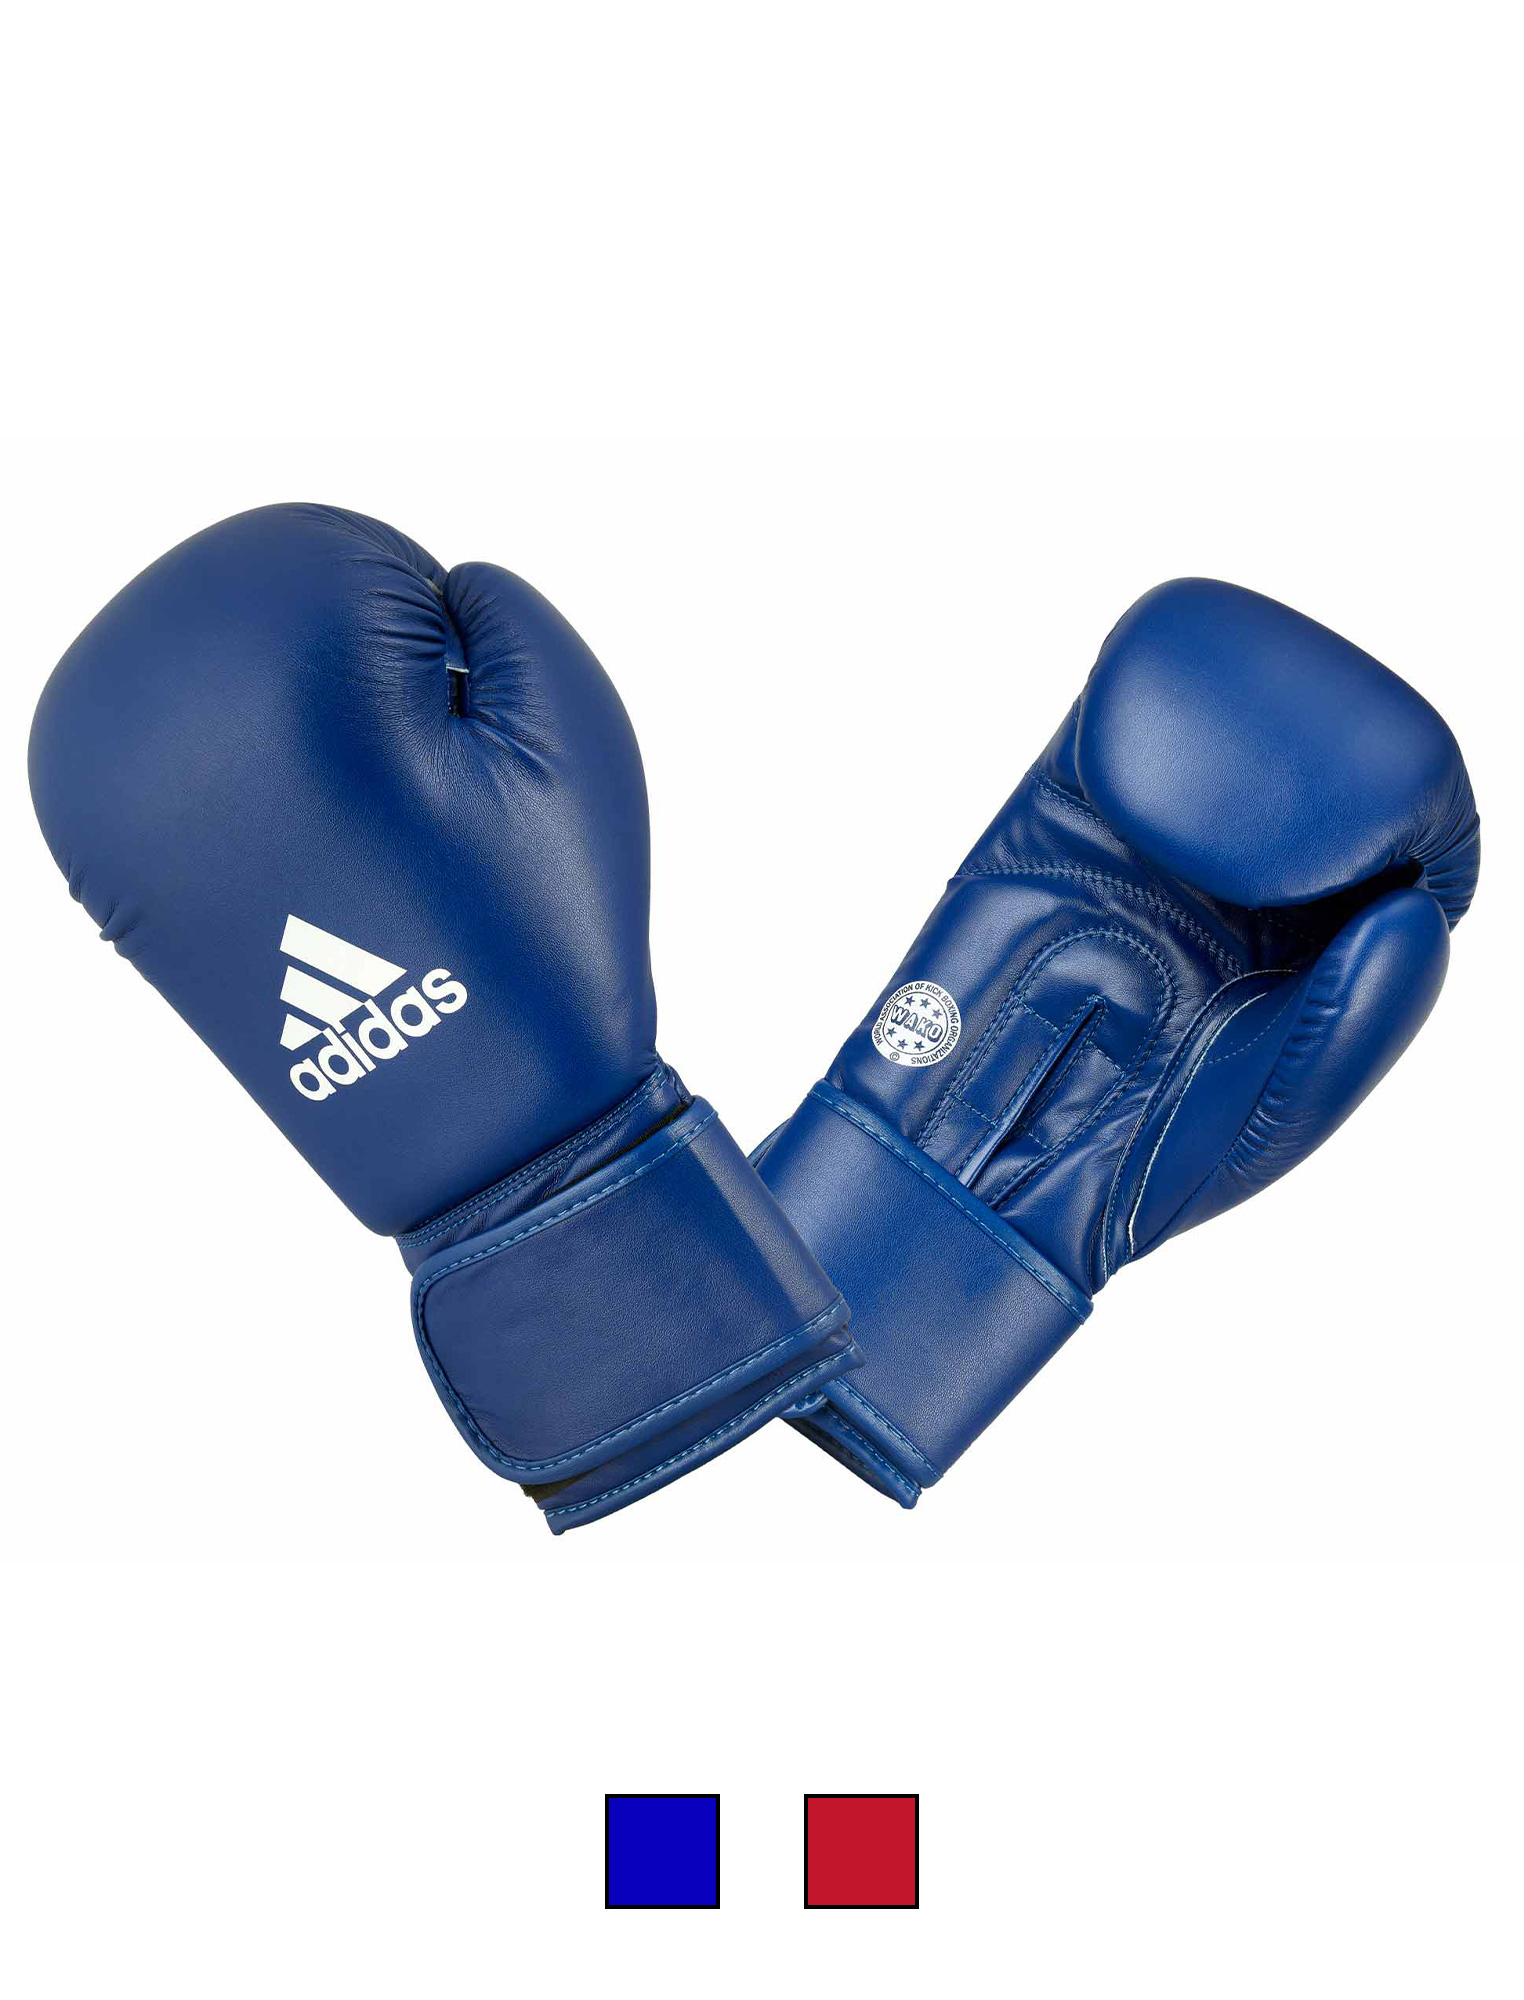 adidas WAKO Kickboxing Training Glove 10 oz  ADIWAKOG2 blue